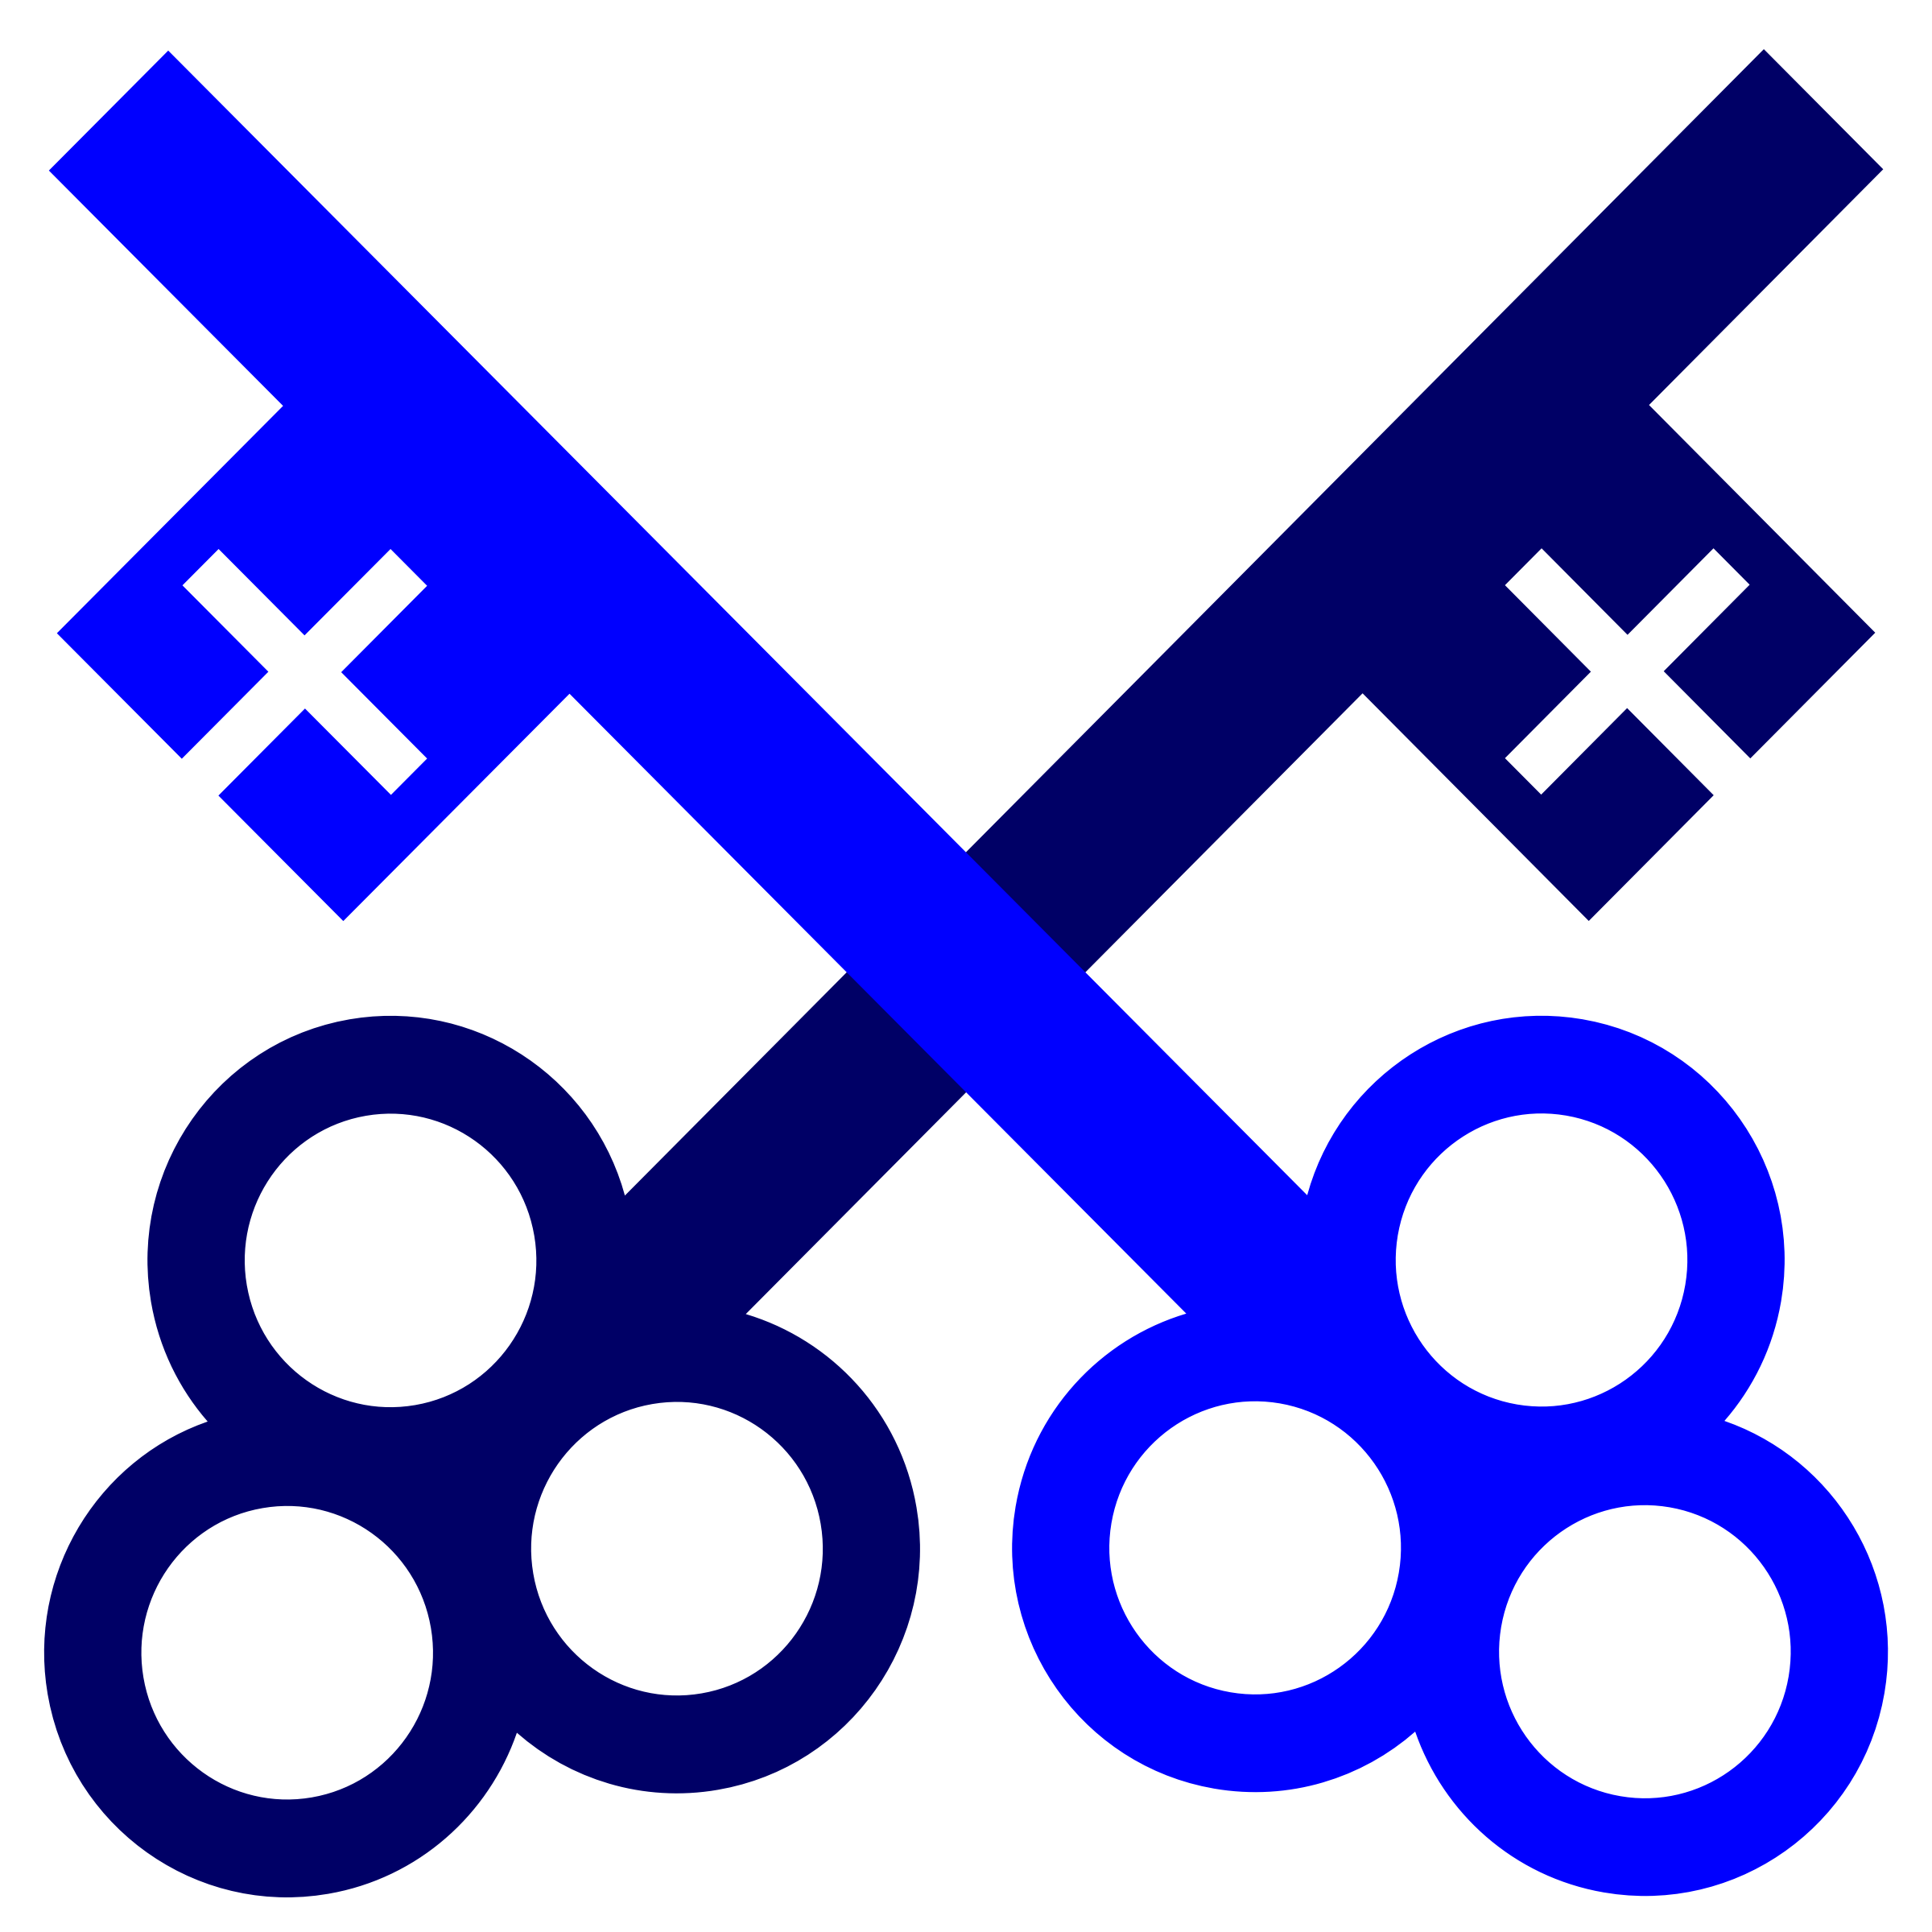 blue-cross-keys-vector-clipart.png